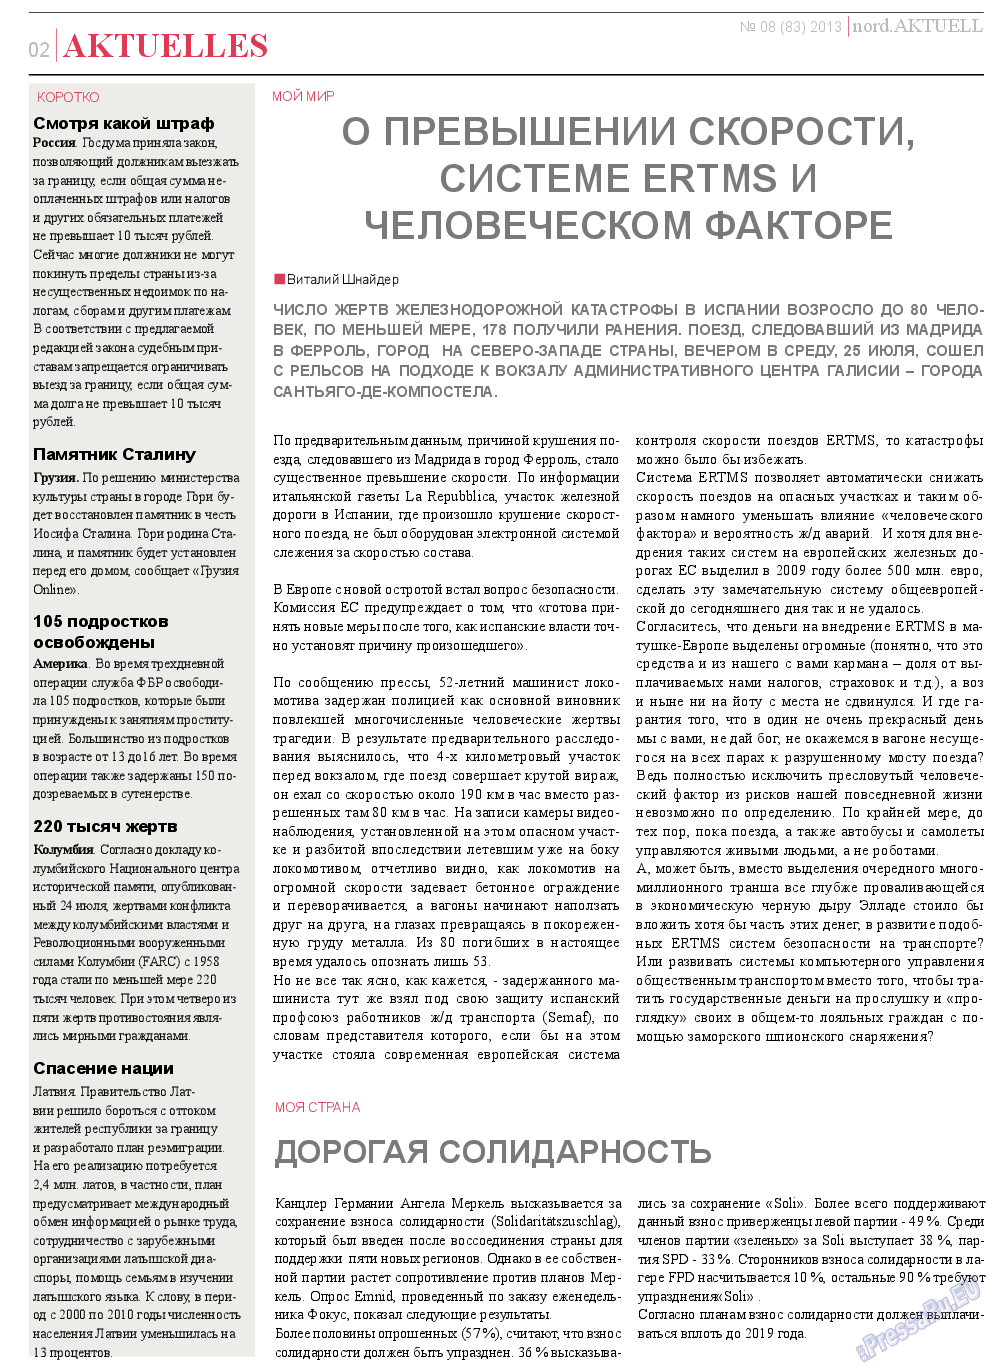 nord.Aktuell, газета. 2013 №8 стр.2